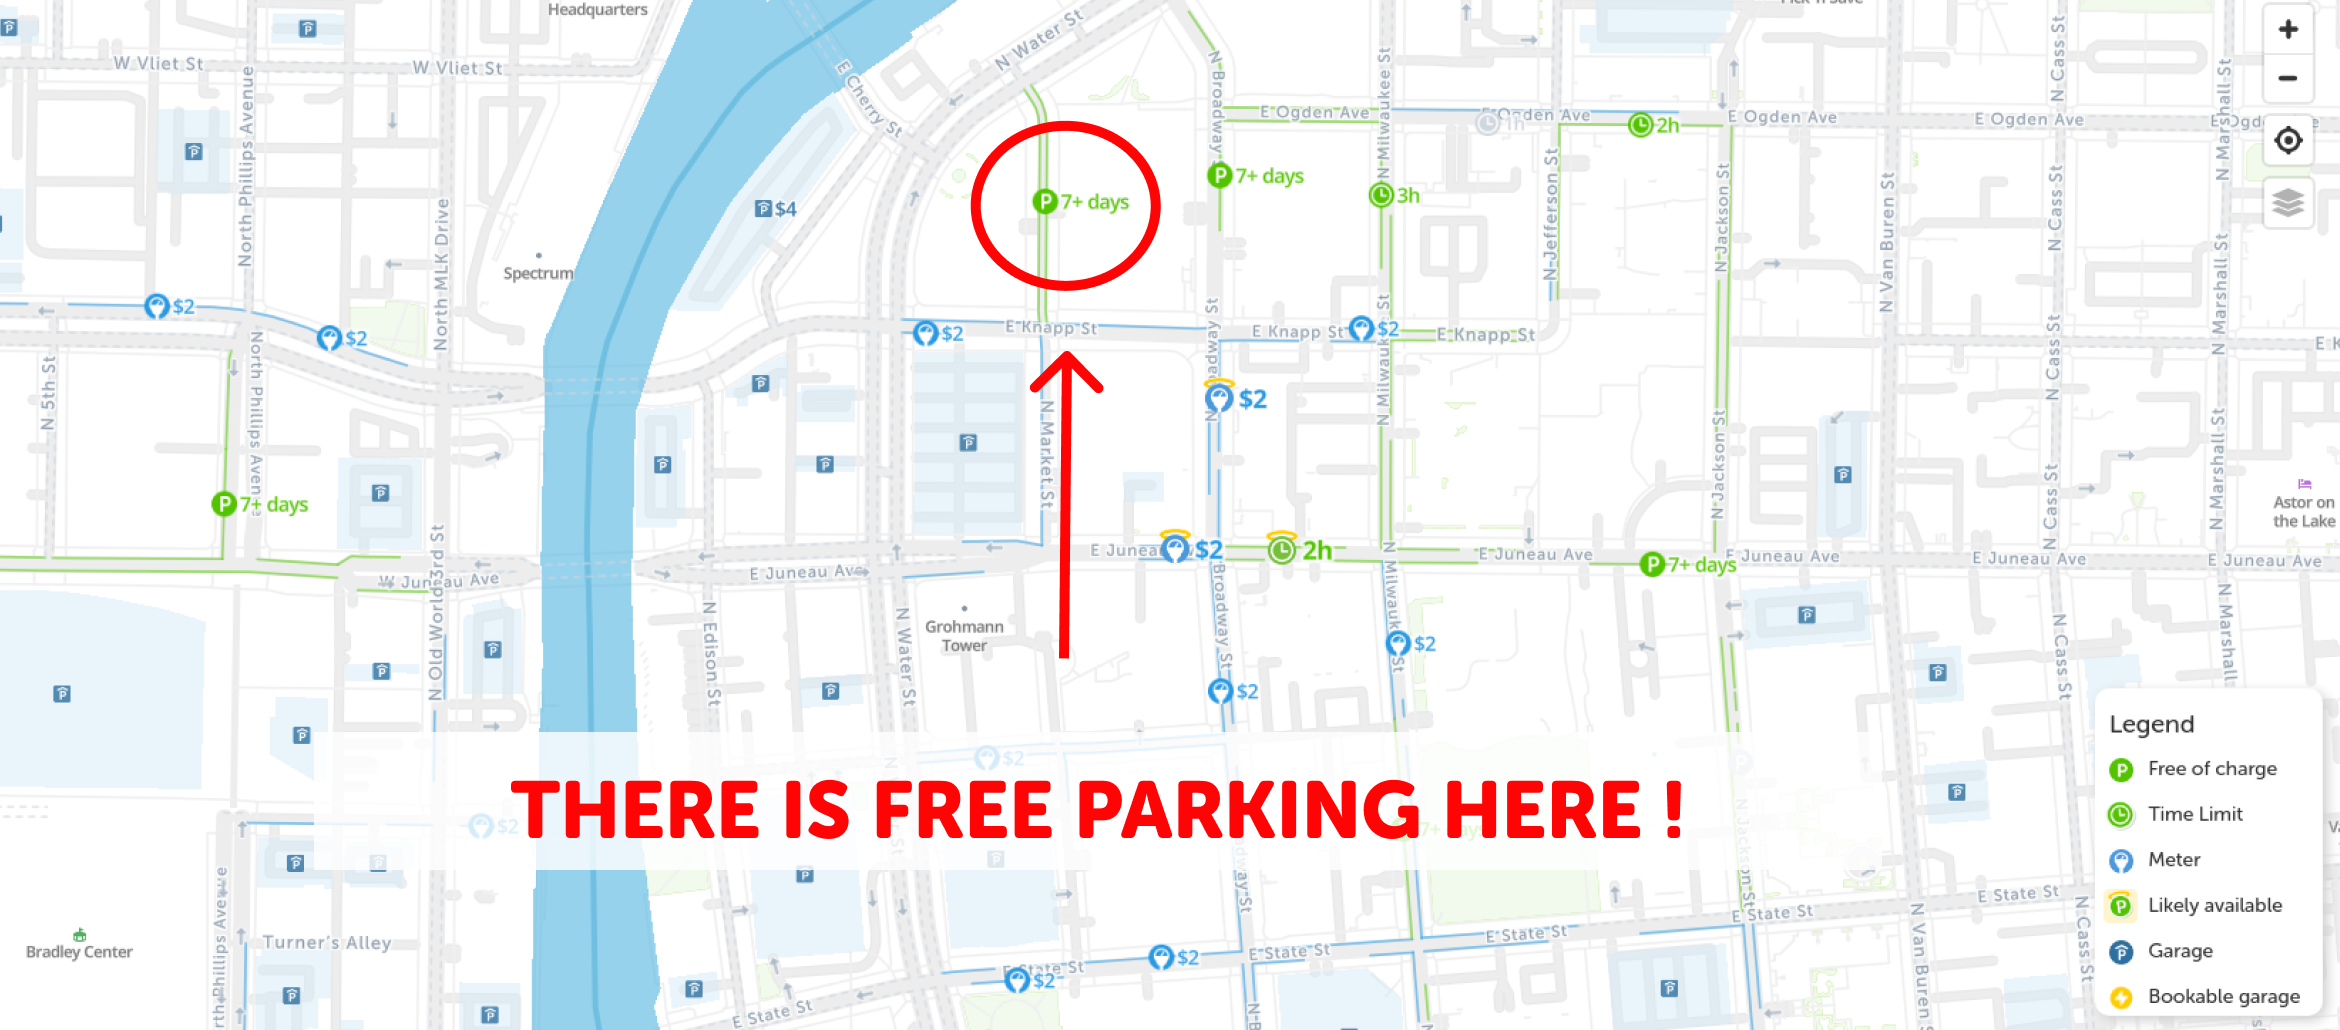 map of street parking in Milwaukee - SpotAngels